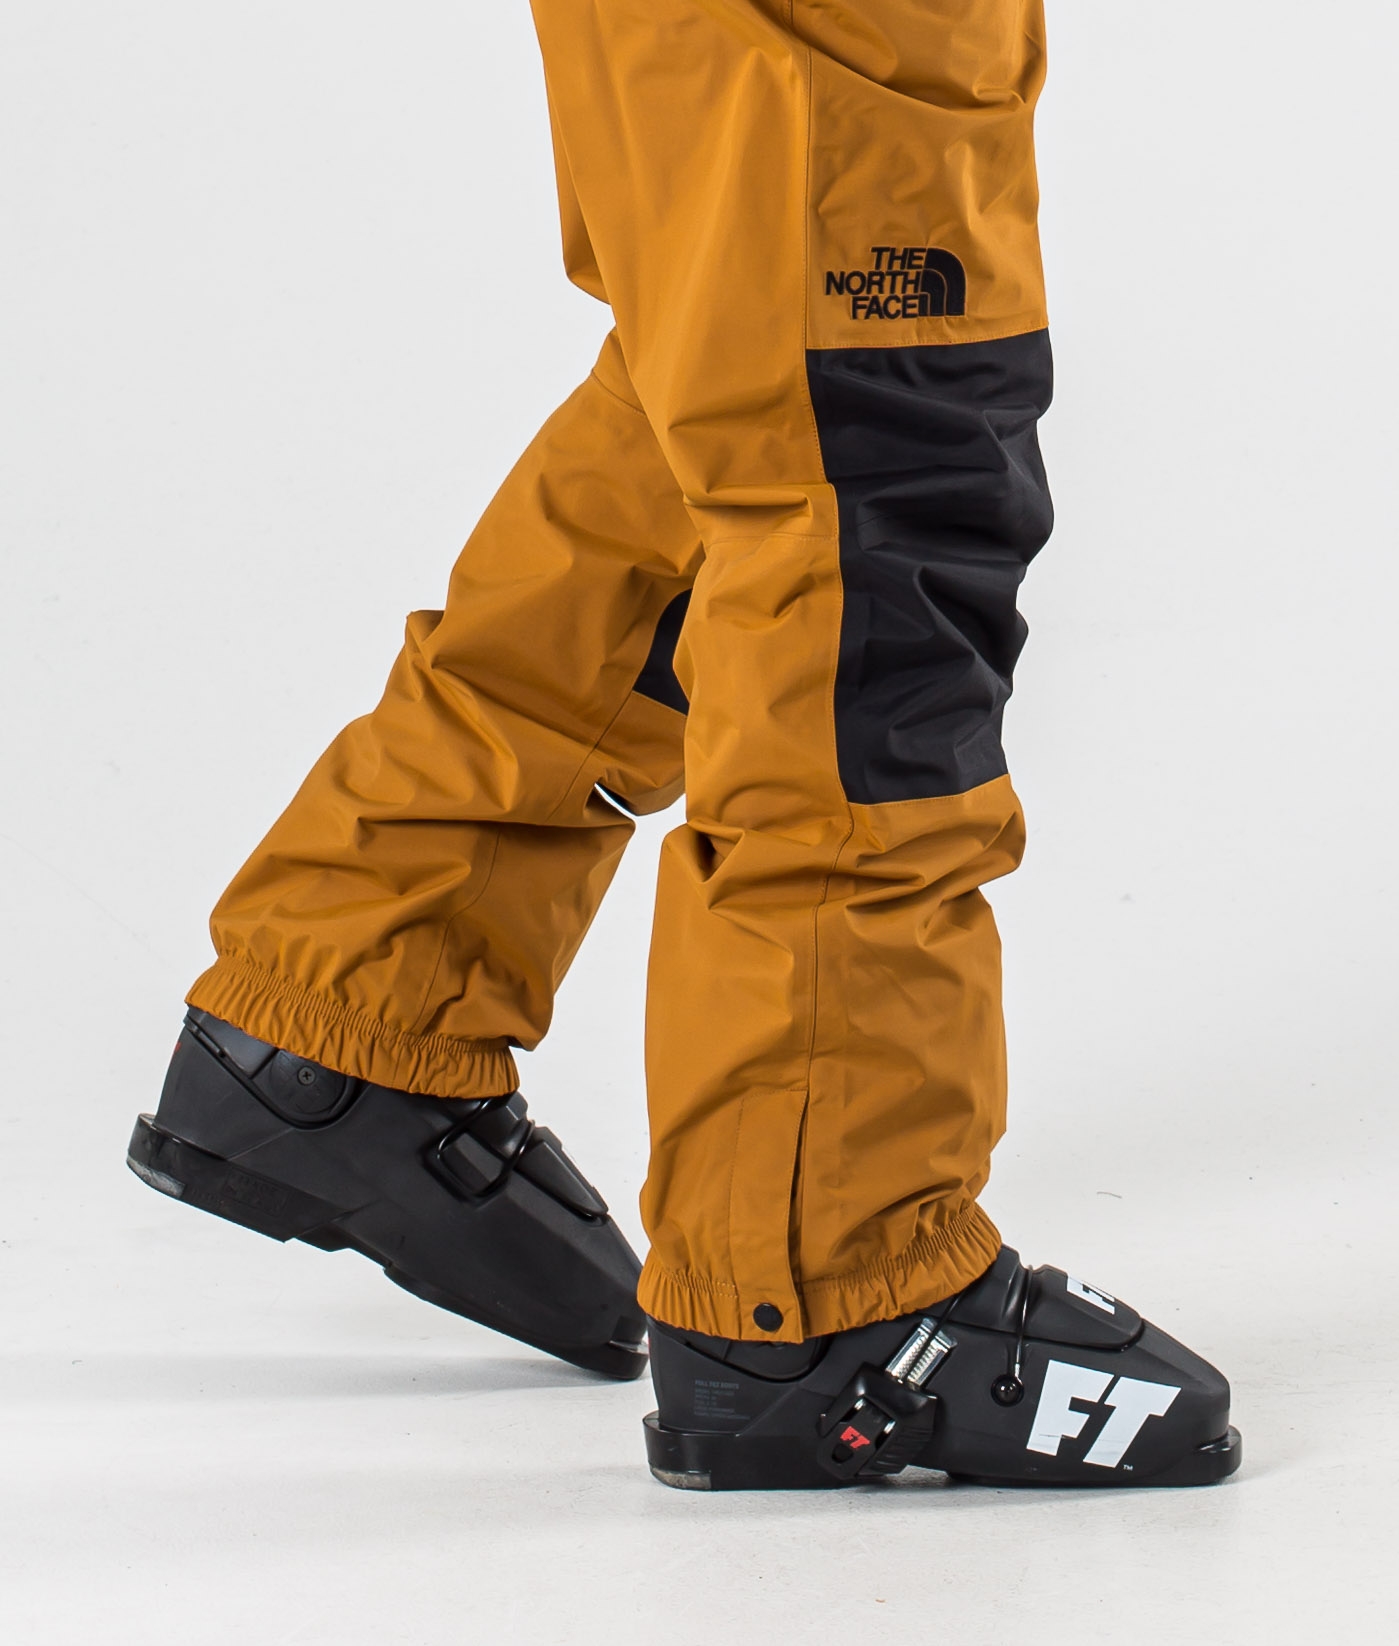 north face ski apparel